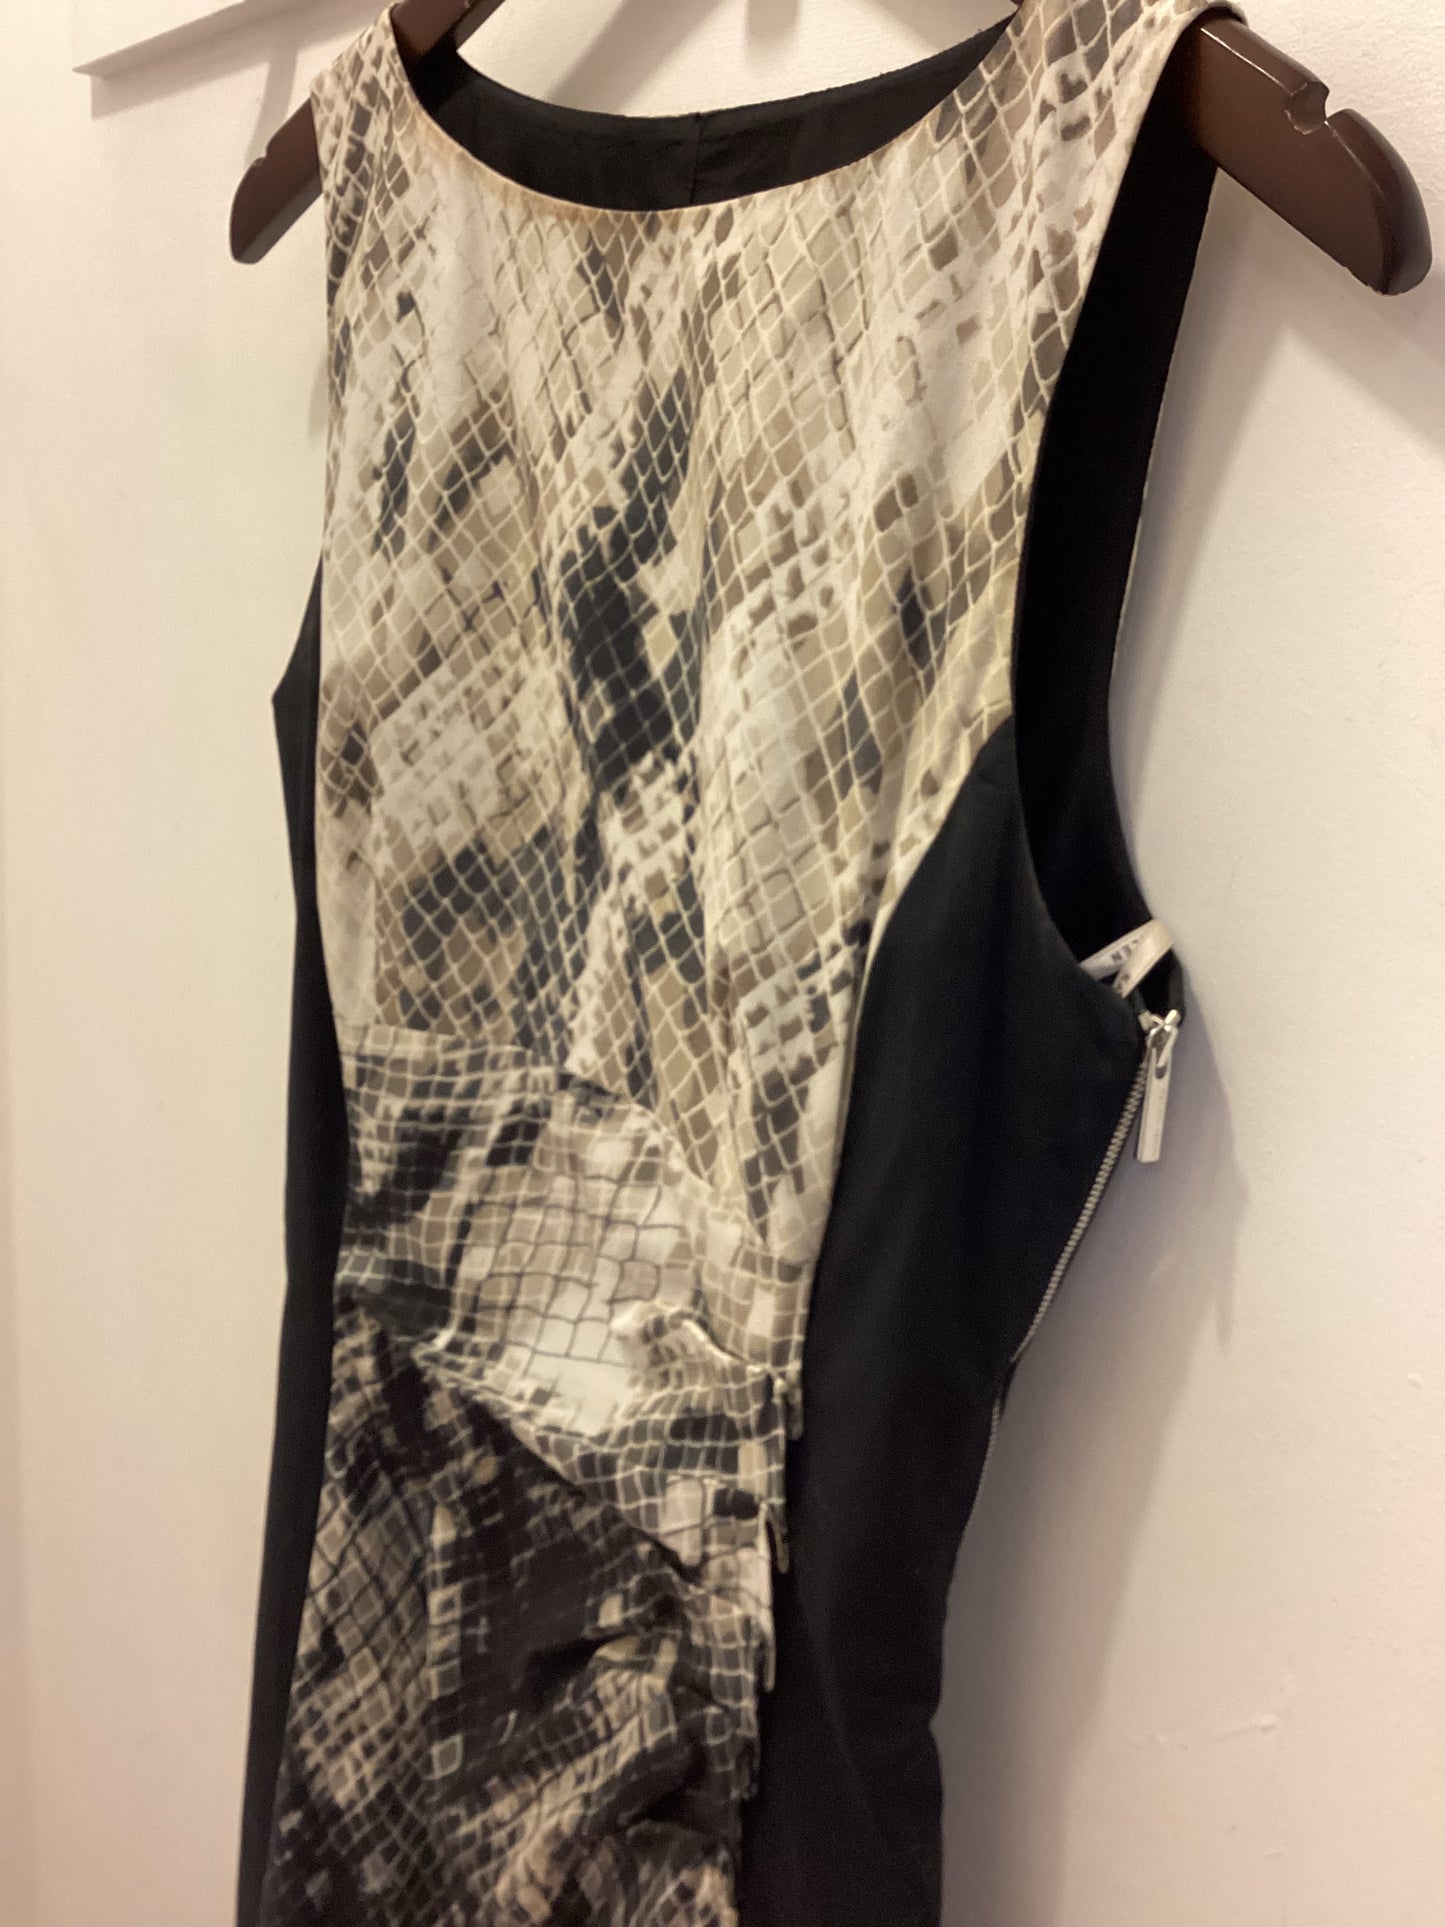 Karen Millen Black and Grey Snake Print Cocktail Dress Size 10